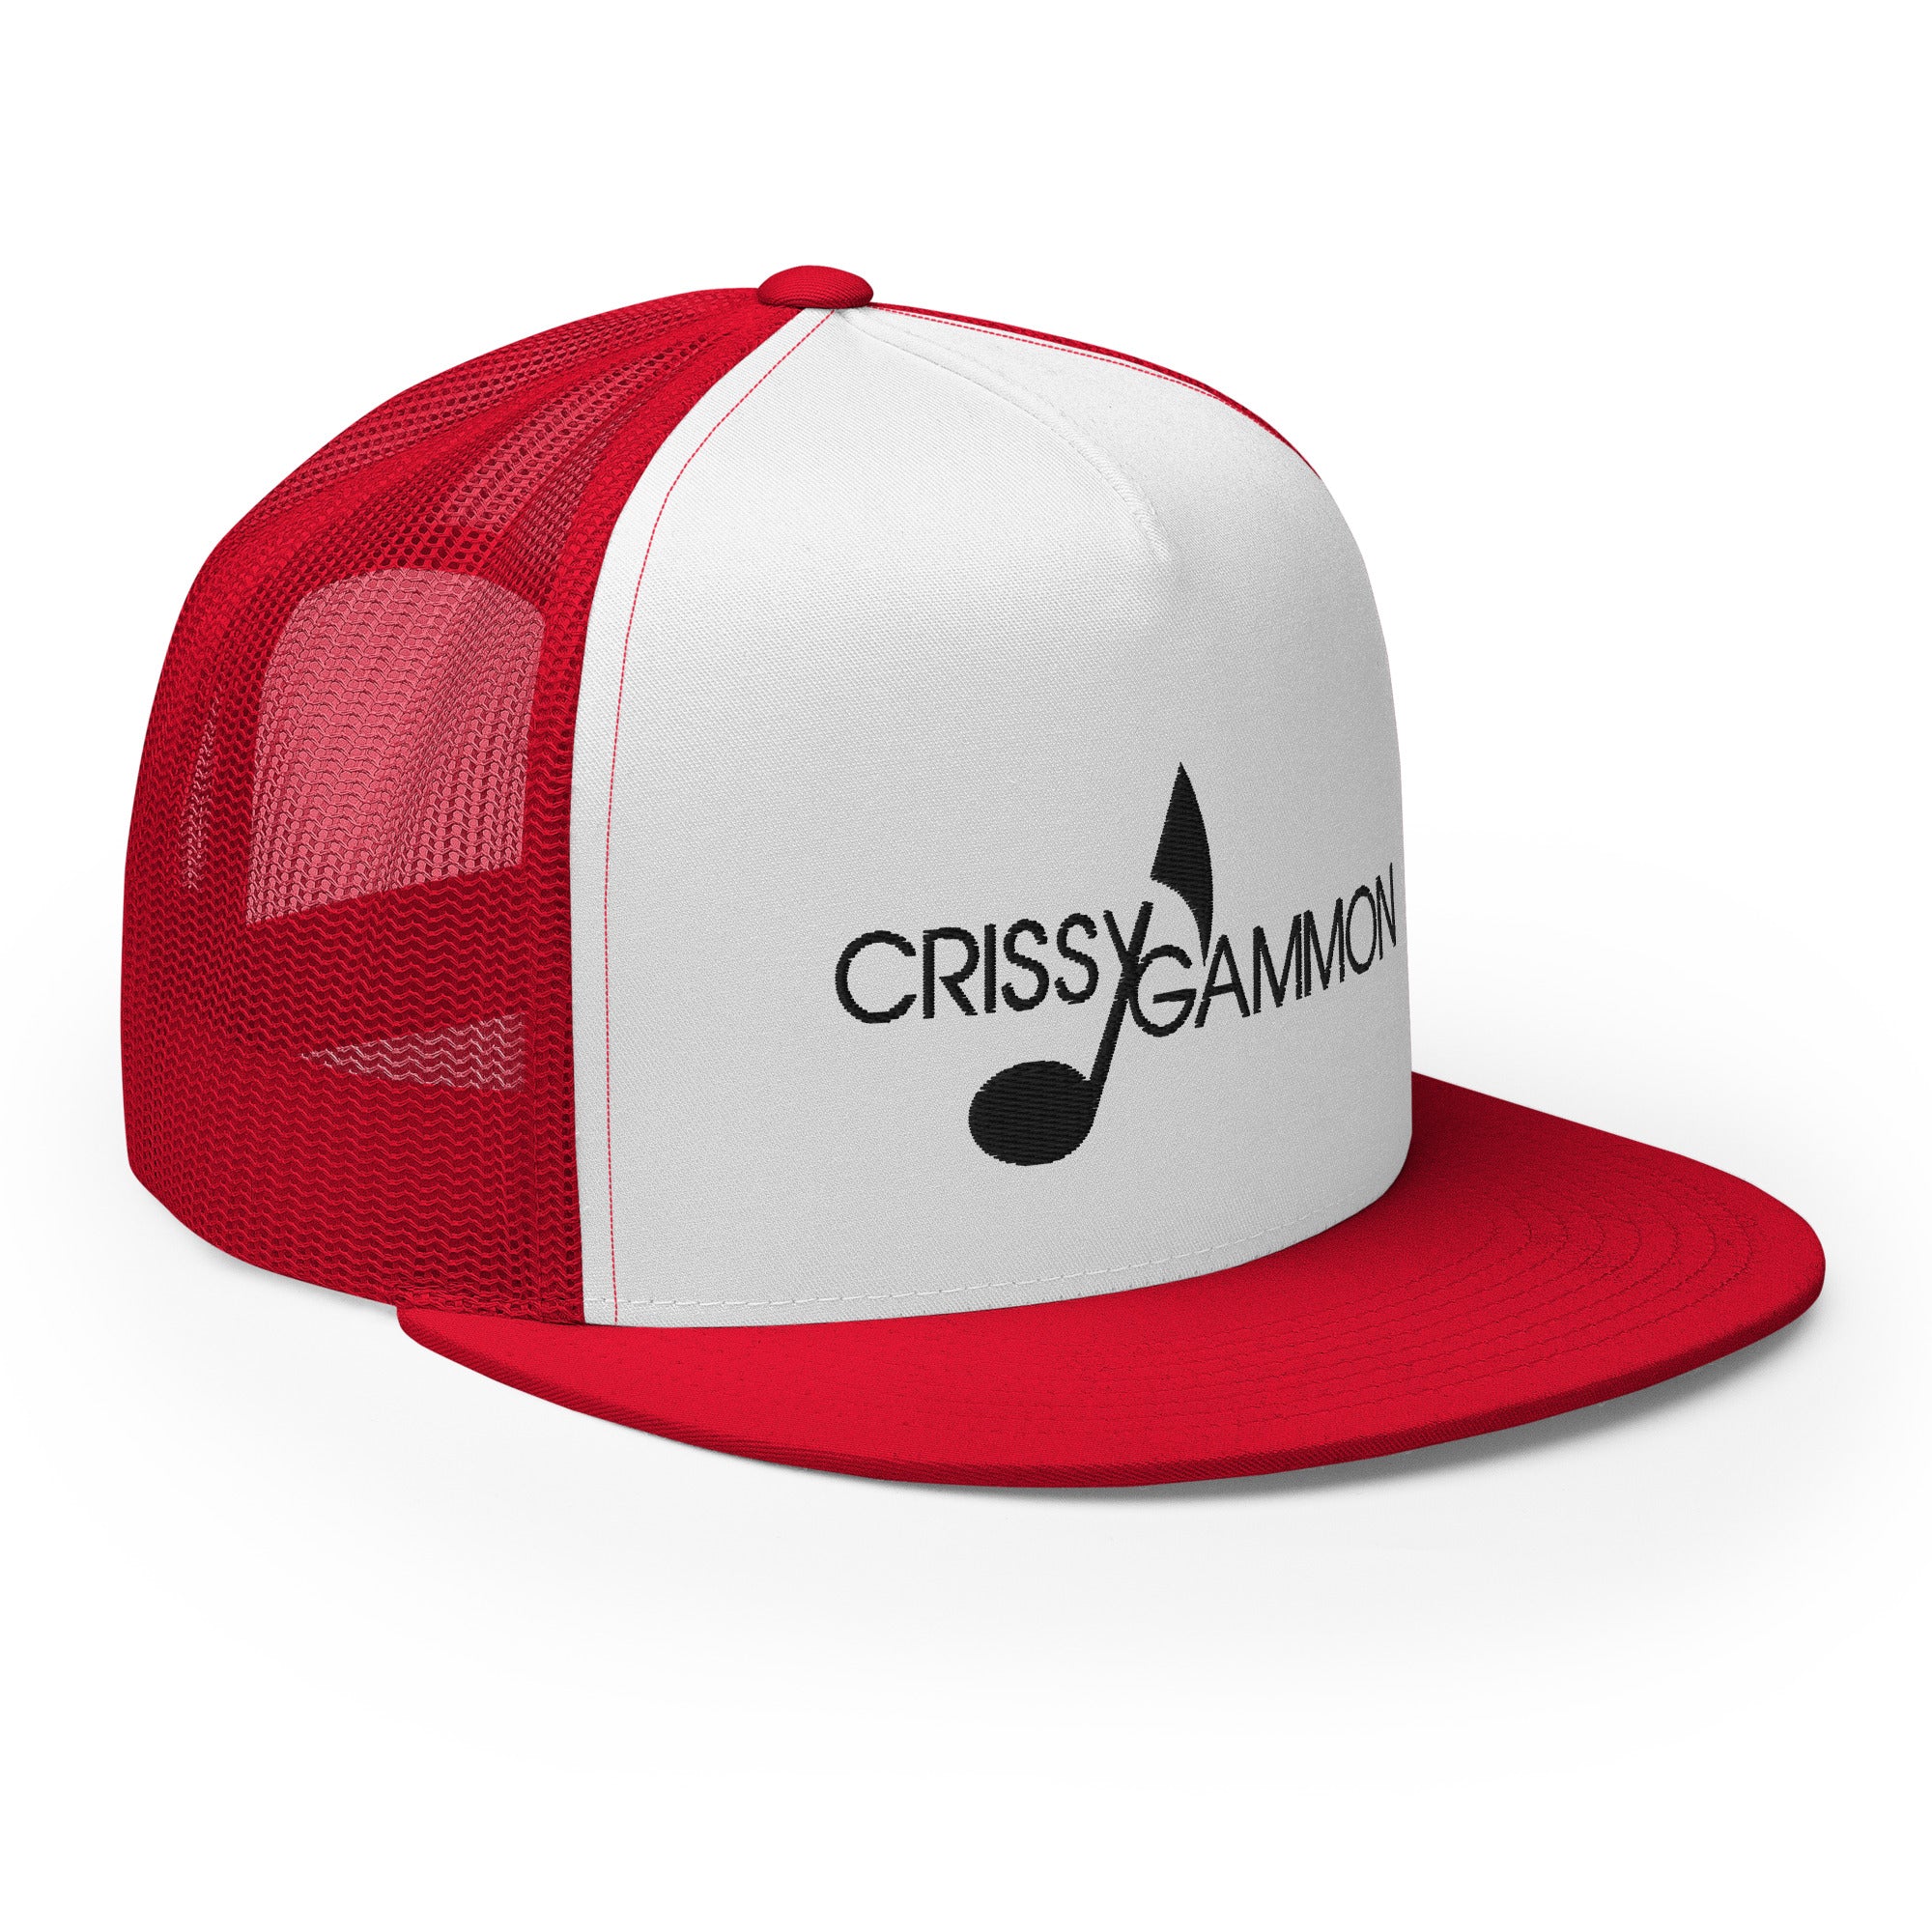 Crissy-Gammon - Trucker Cap